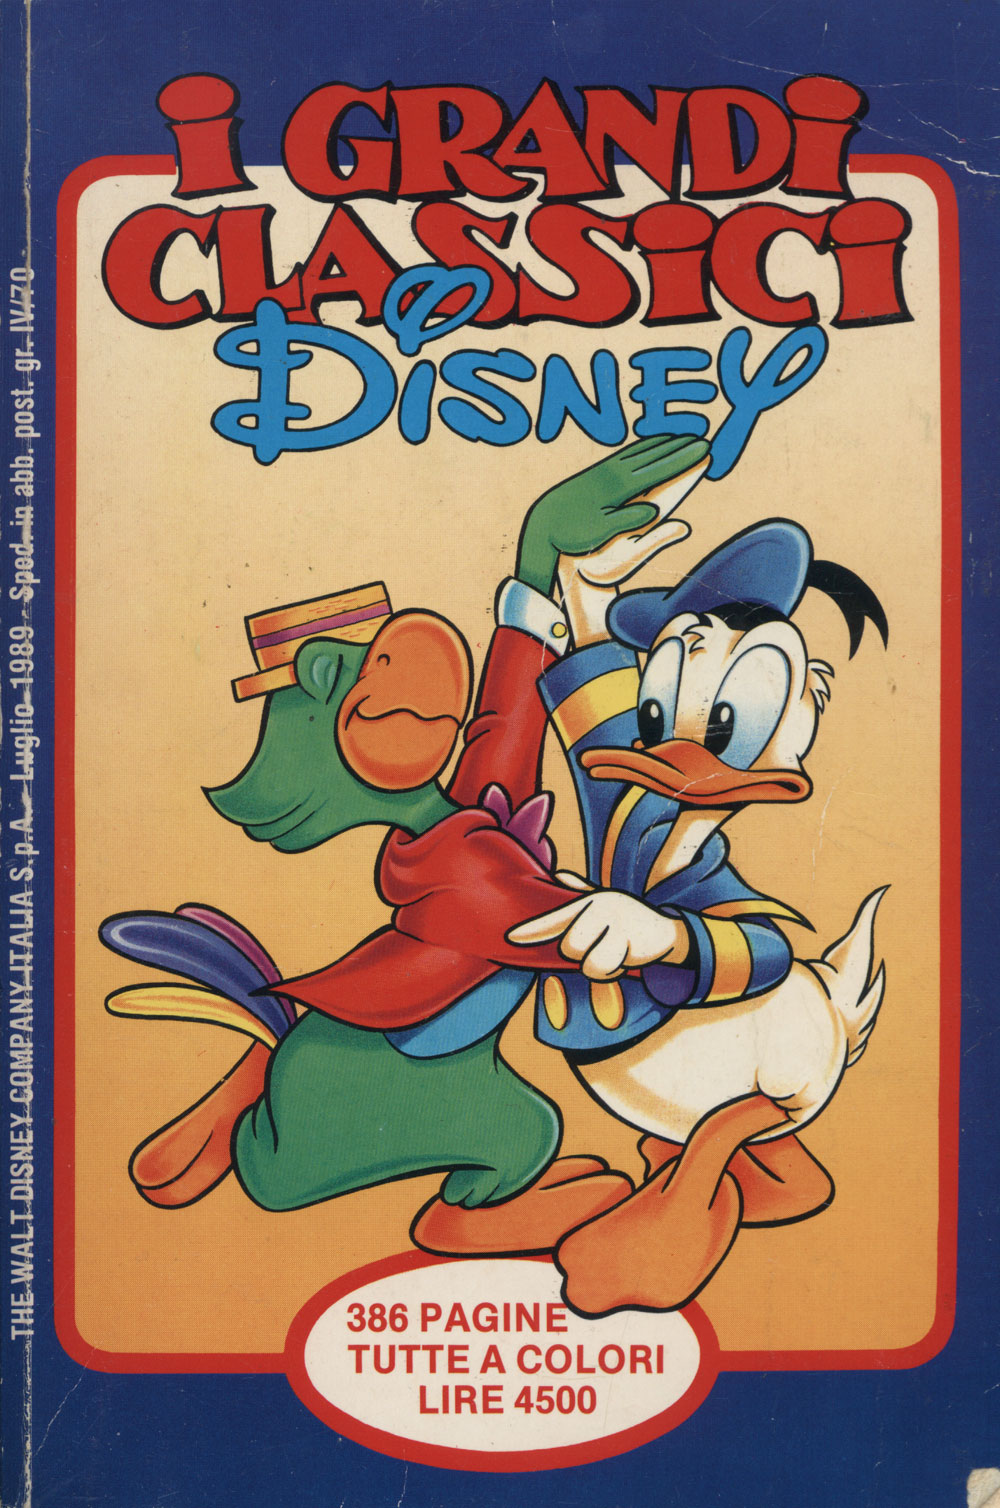 I Grandi Classici Disney 40